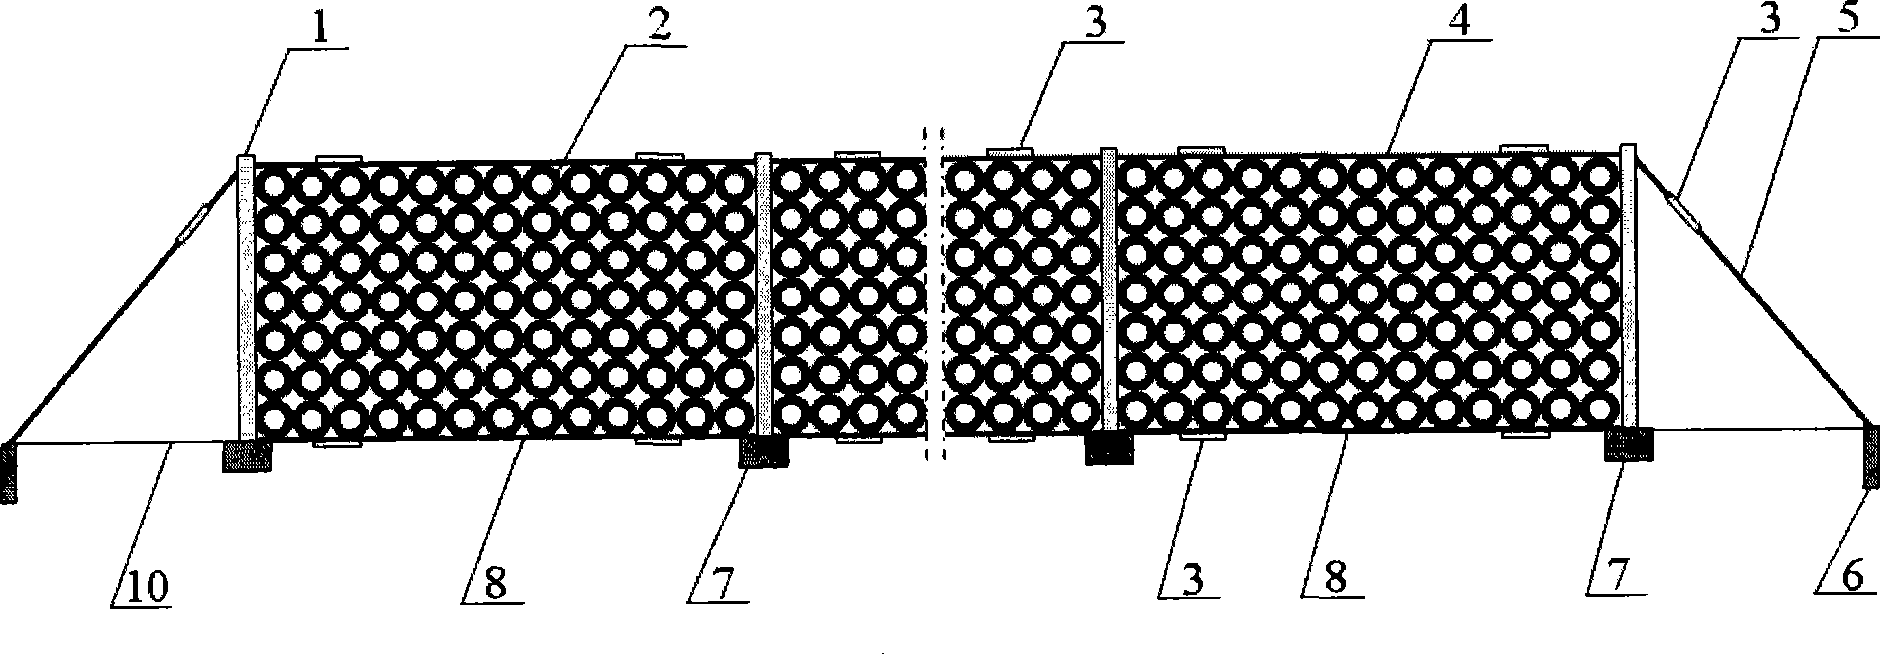 Production method of vertical stone blocking net